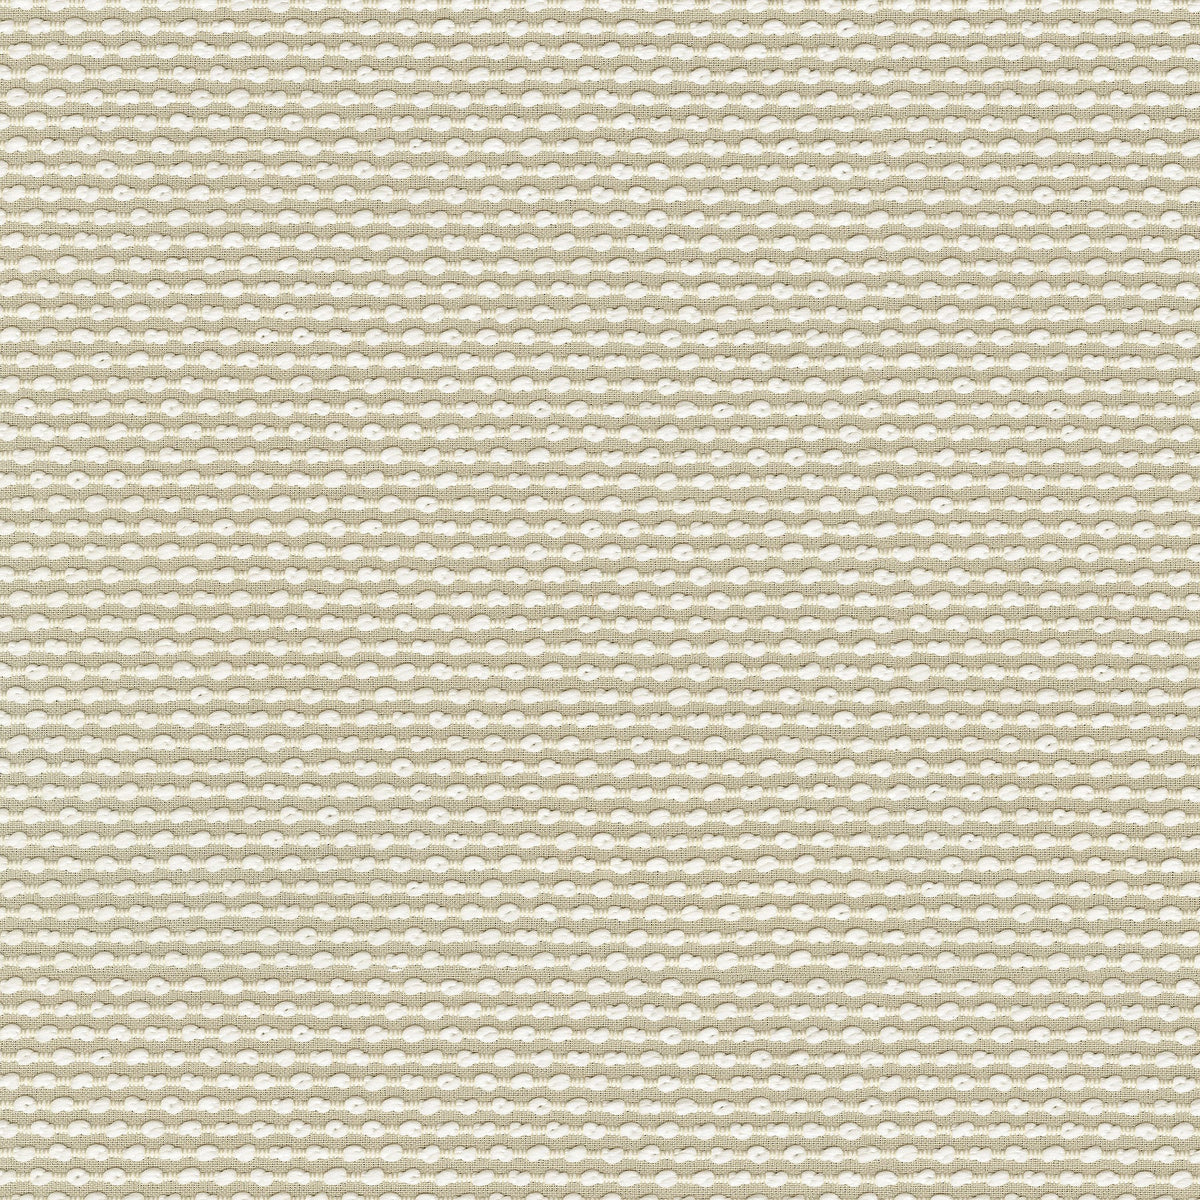 P/K Lifestyles Breuer - Cream 411511 Upholstery Fabric